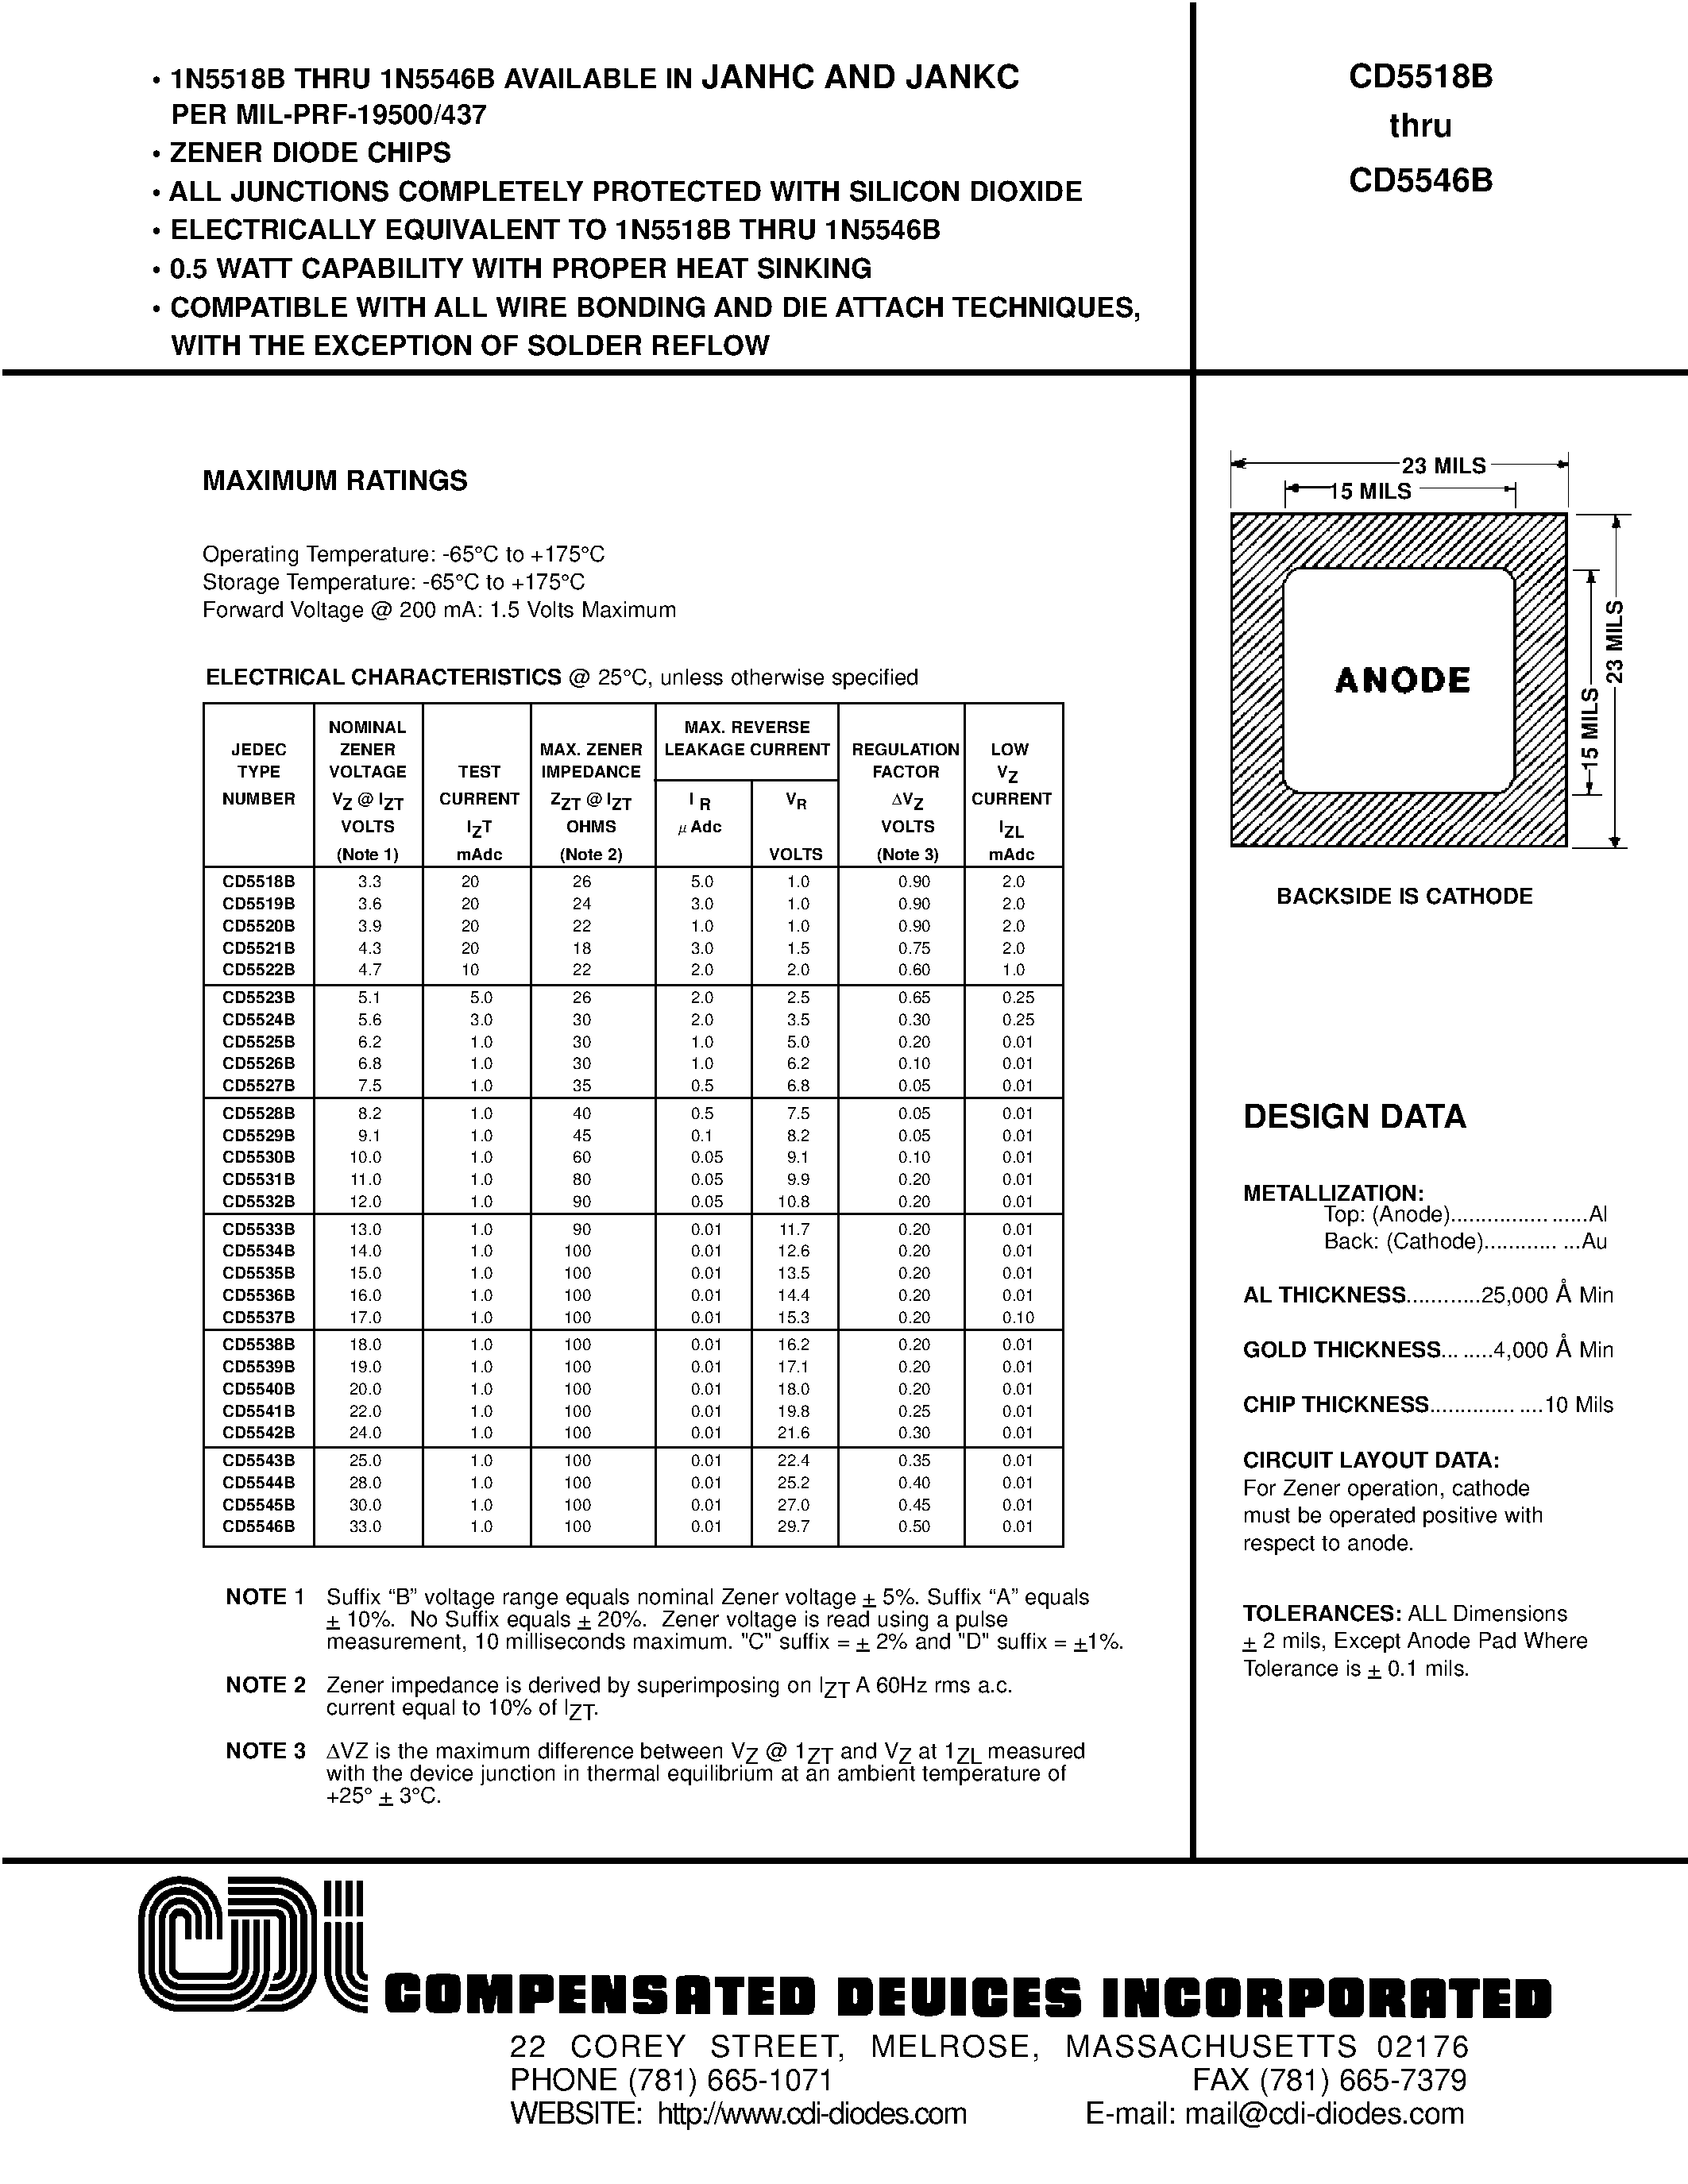 Datasheet CD5537B - ZENER DIODE CHIPS page 1